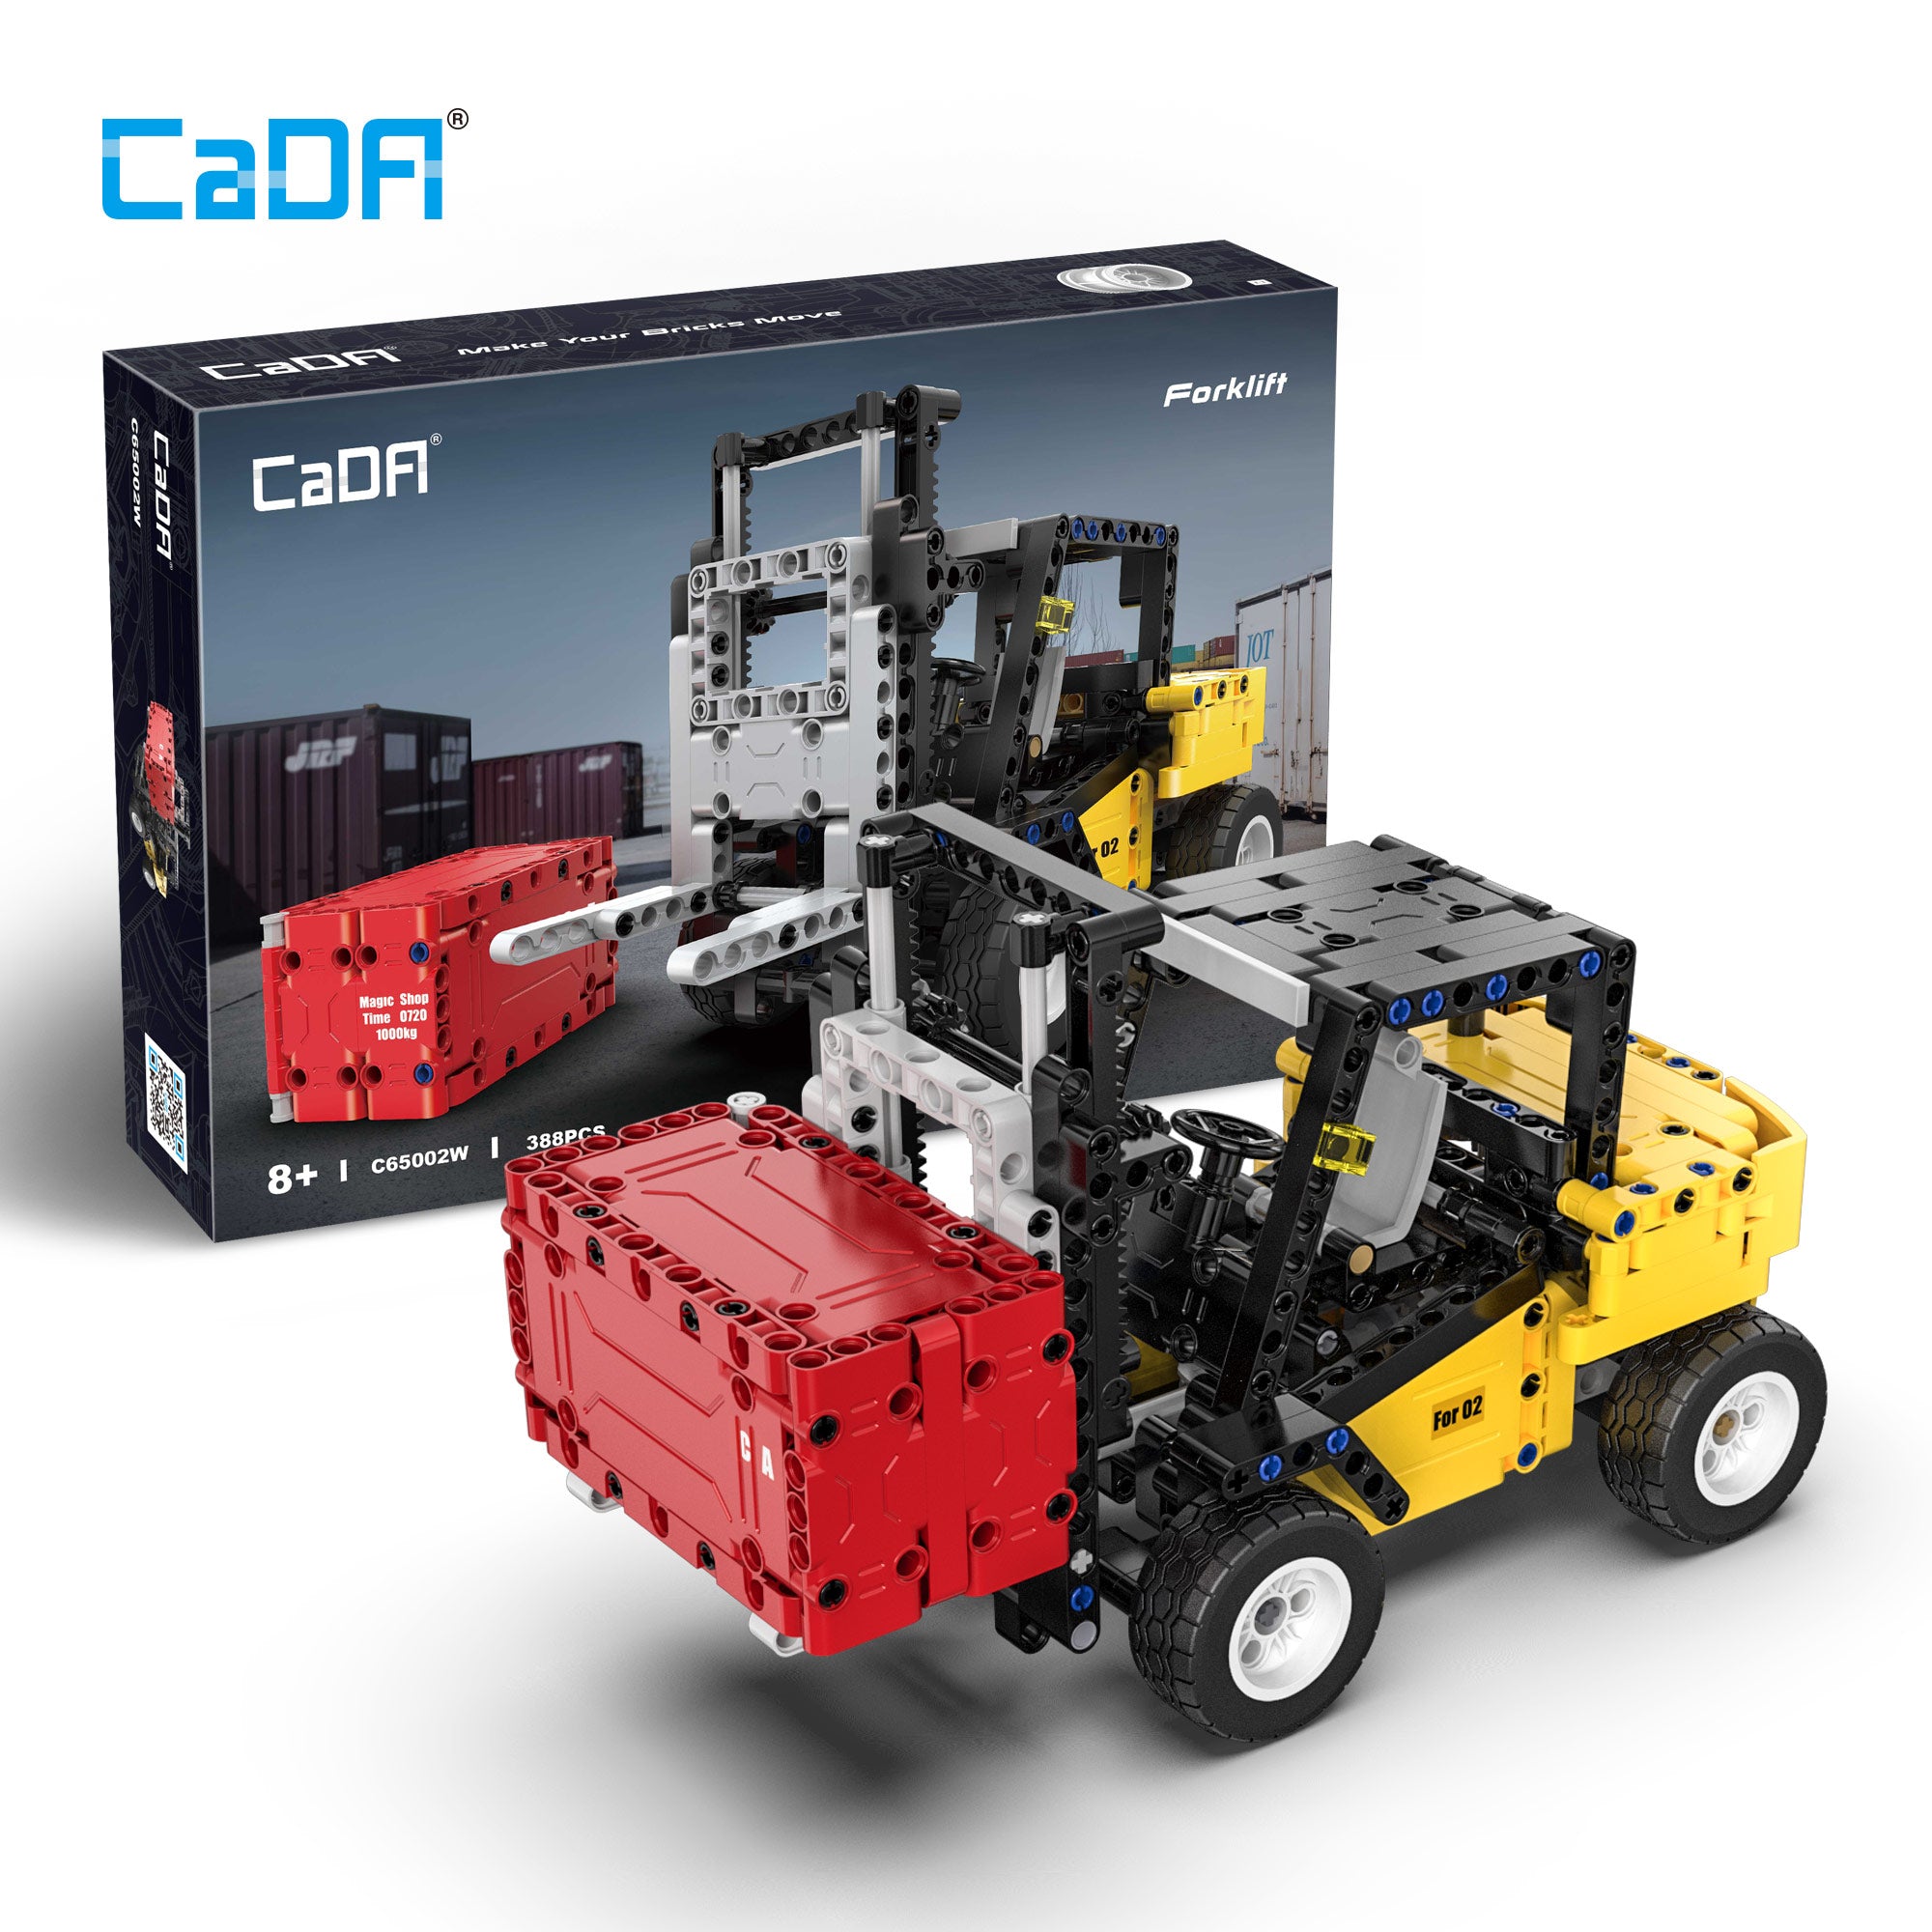 CaDA Construction Equipment Fleet | C65001W-C65005W